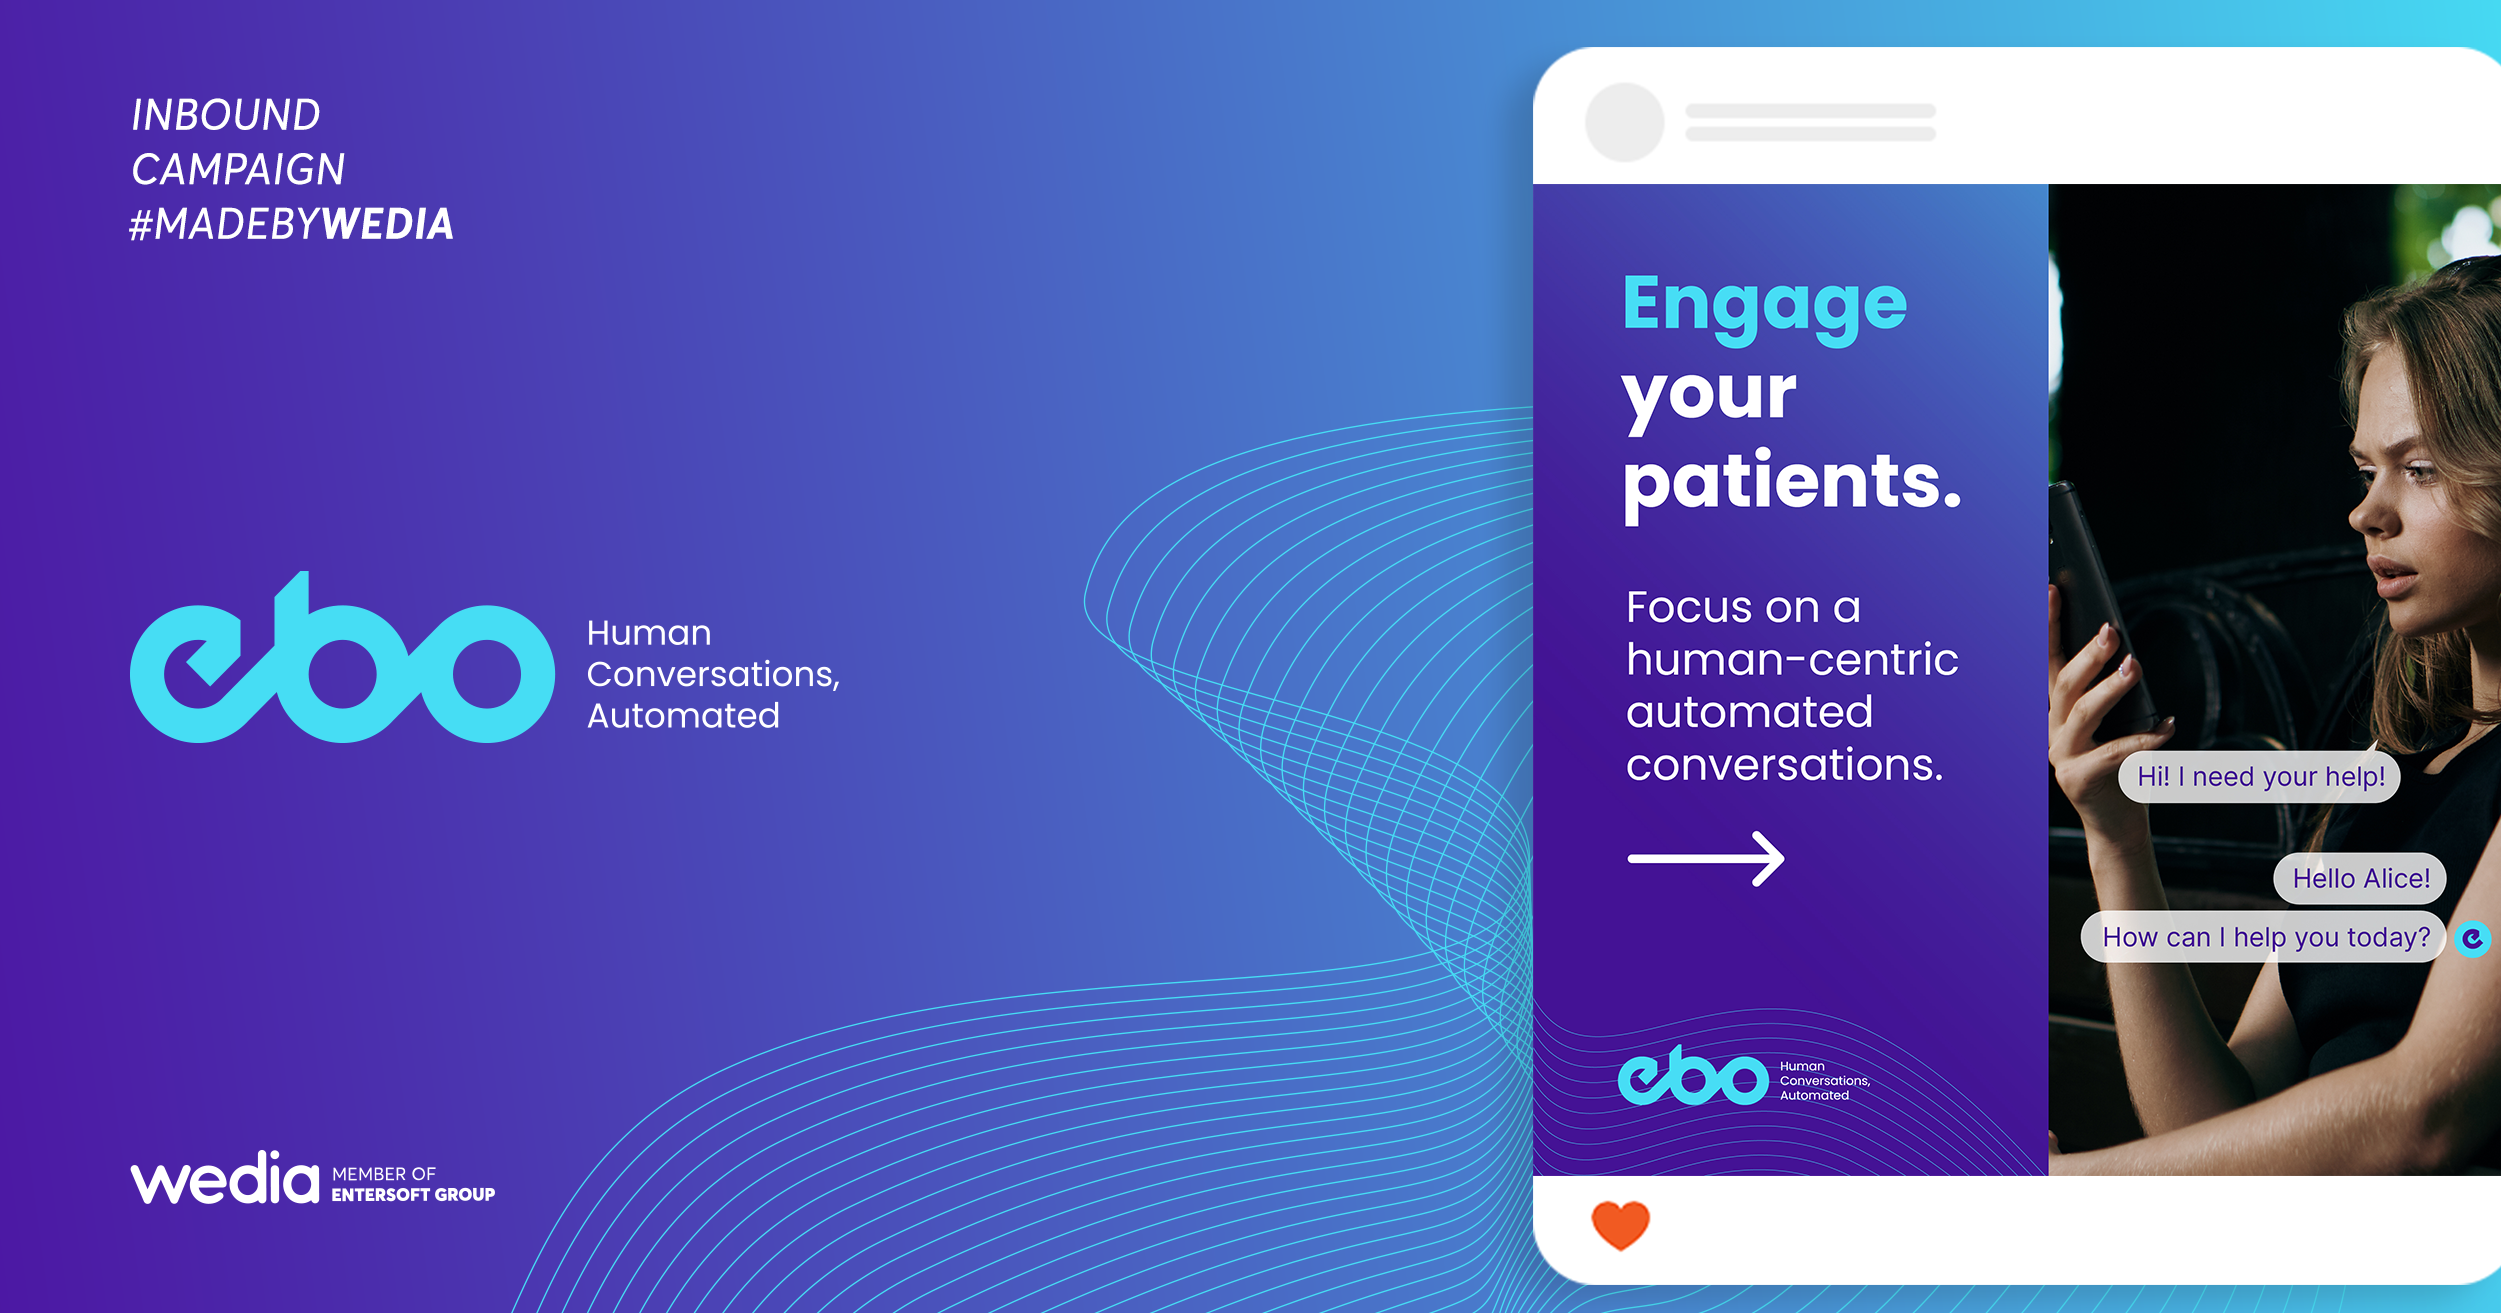 EBO.AI Inbound Campaign: προωθώντας καινοτόμες λύσεις υγείας στη Μ. Βρετανία